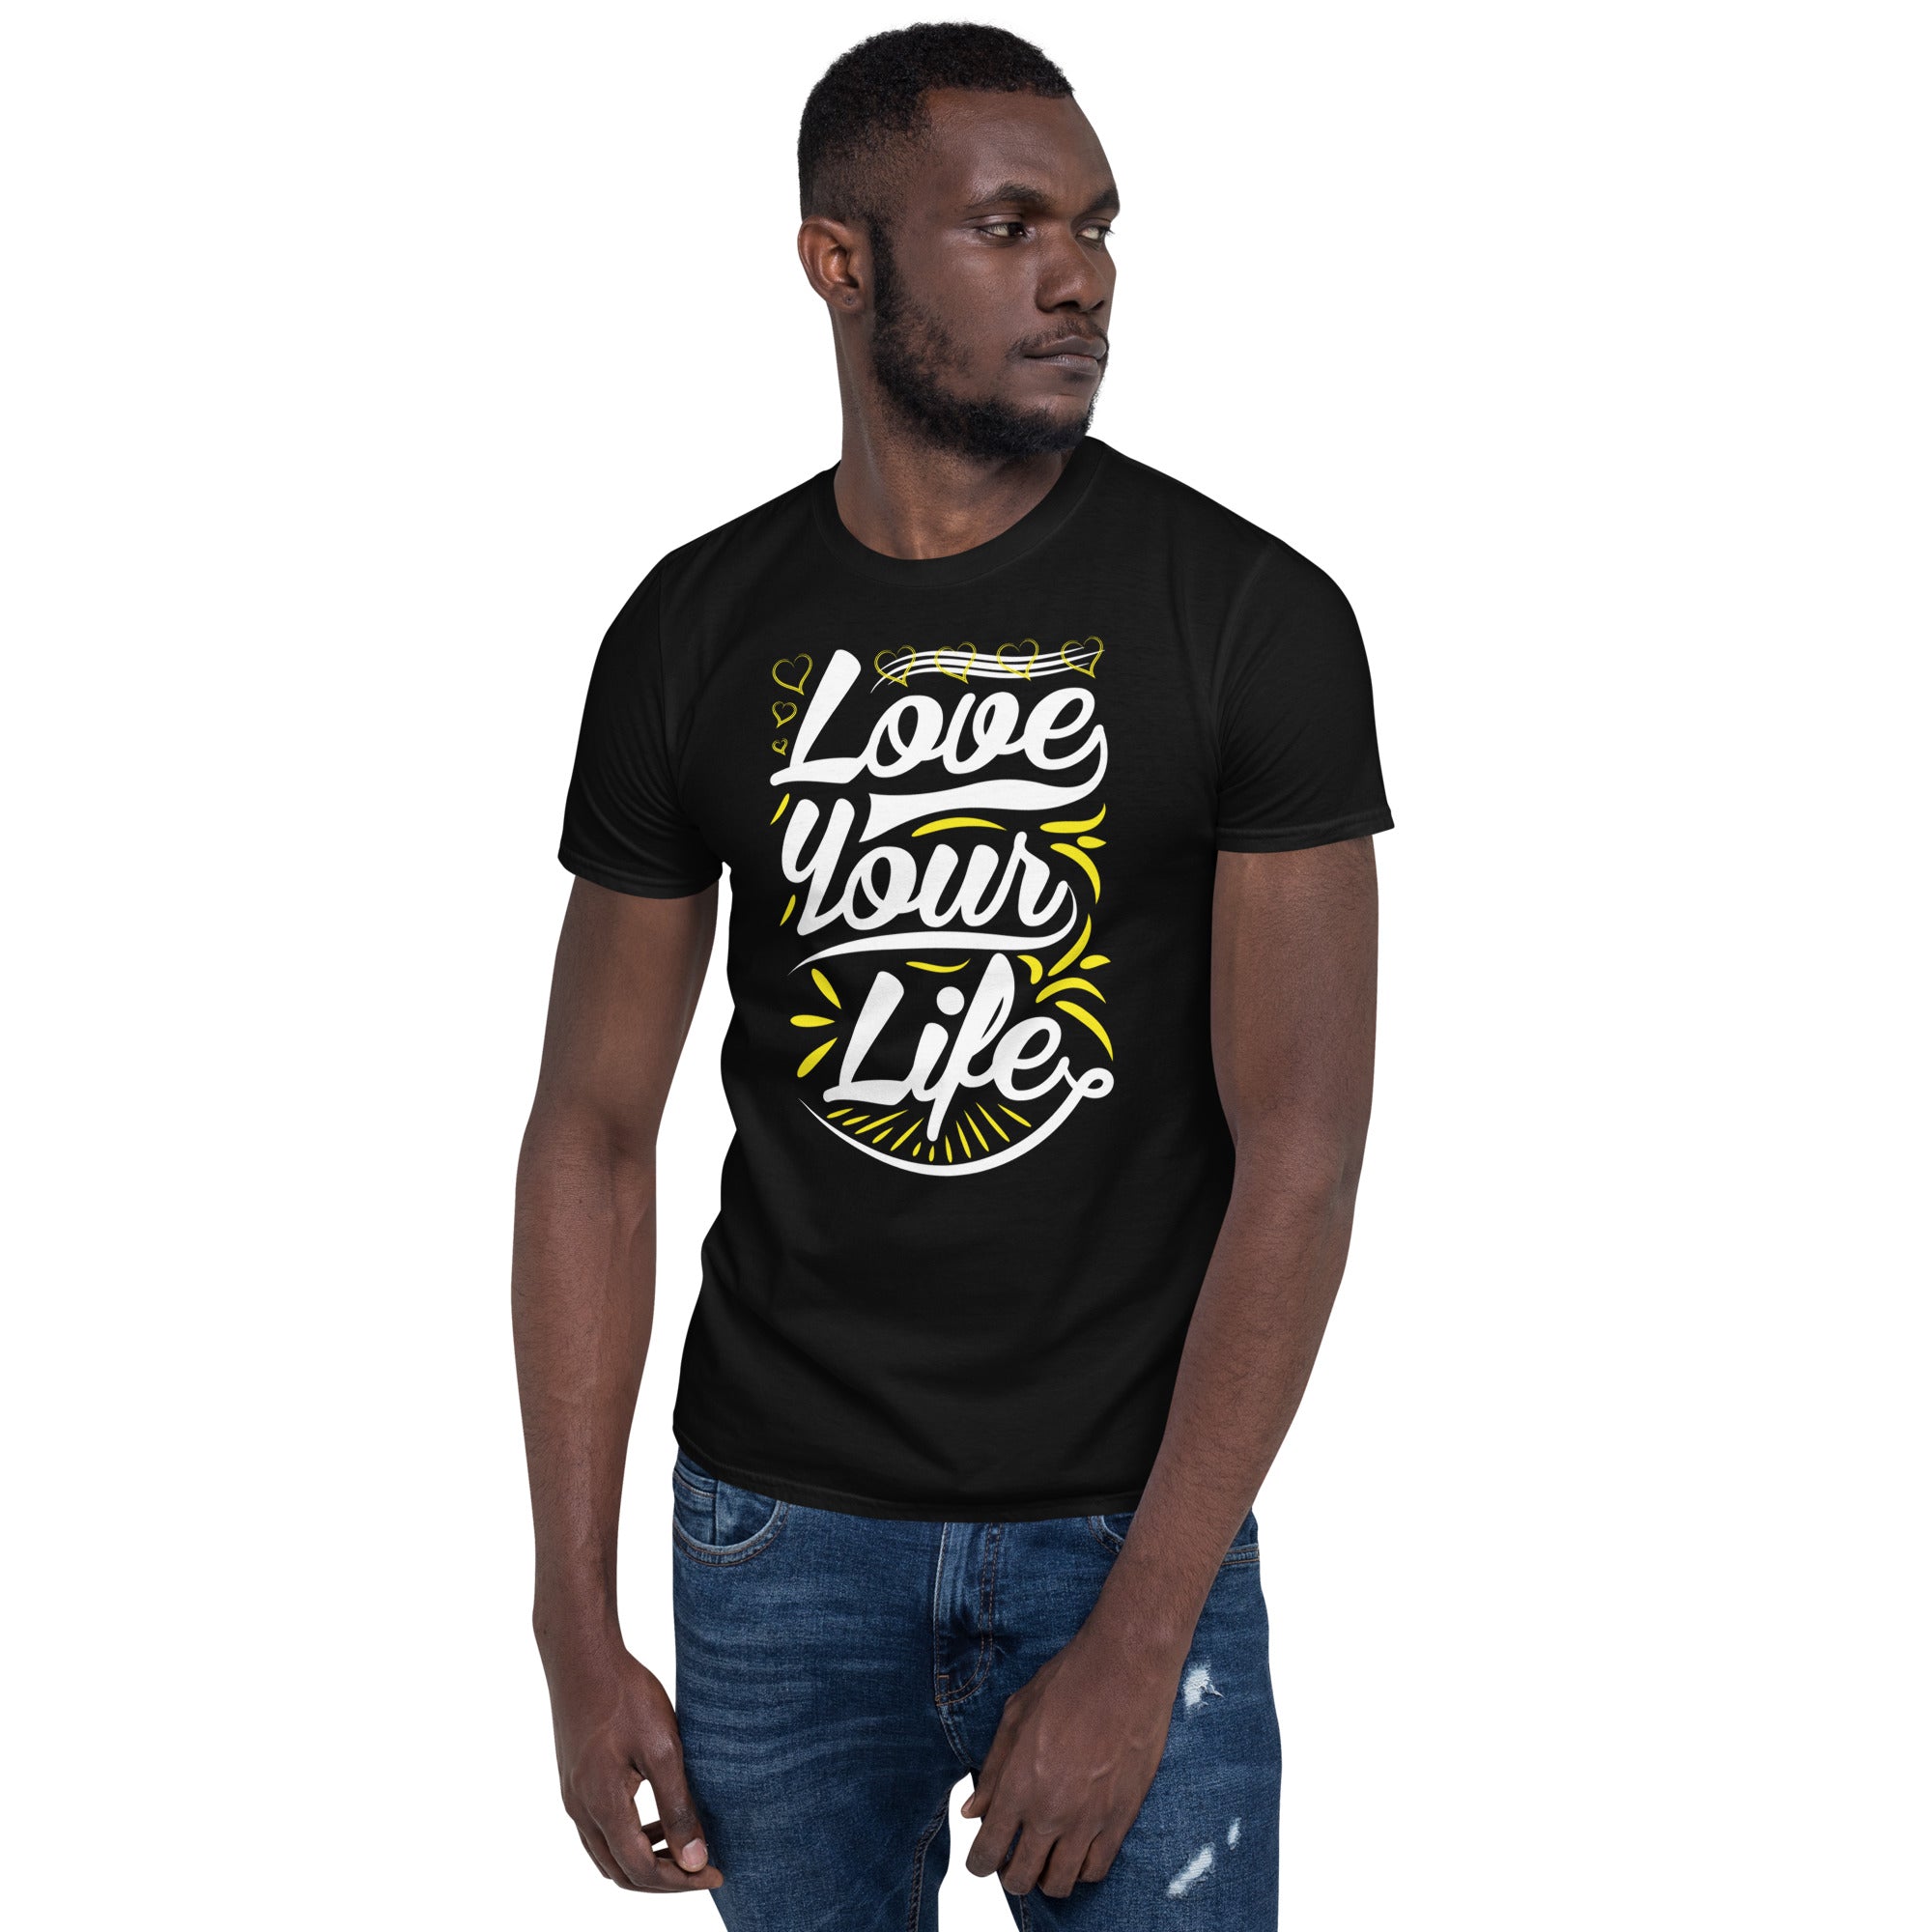 Love Your Life - Short-Sleeve Unisex T-Shirt